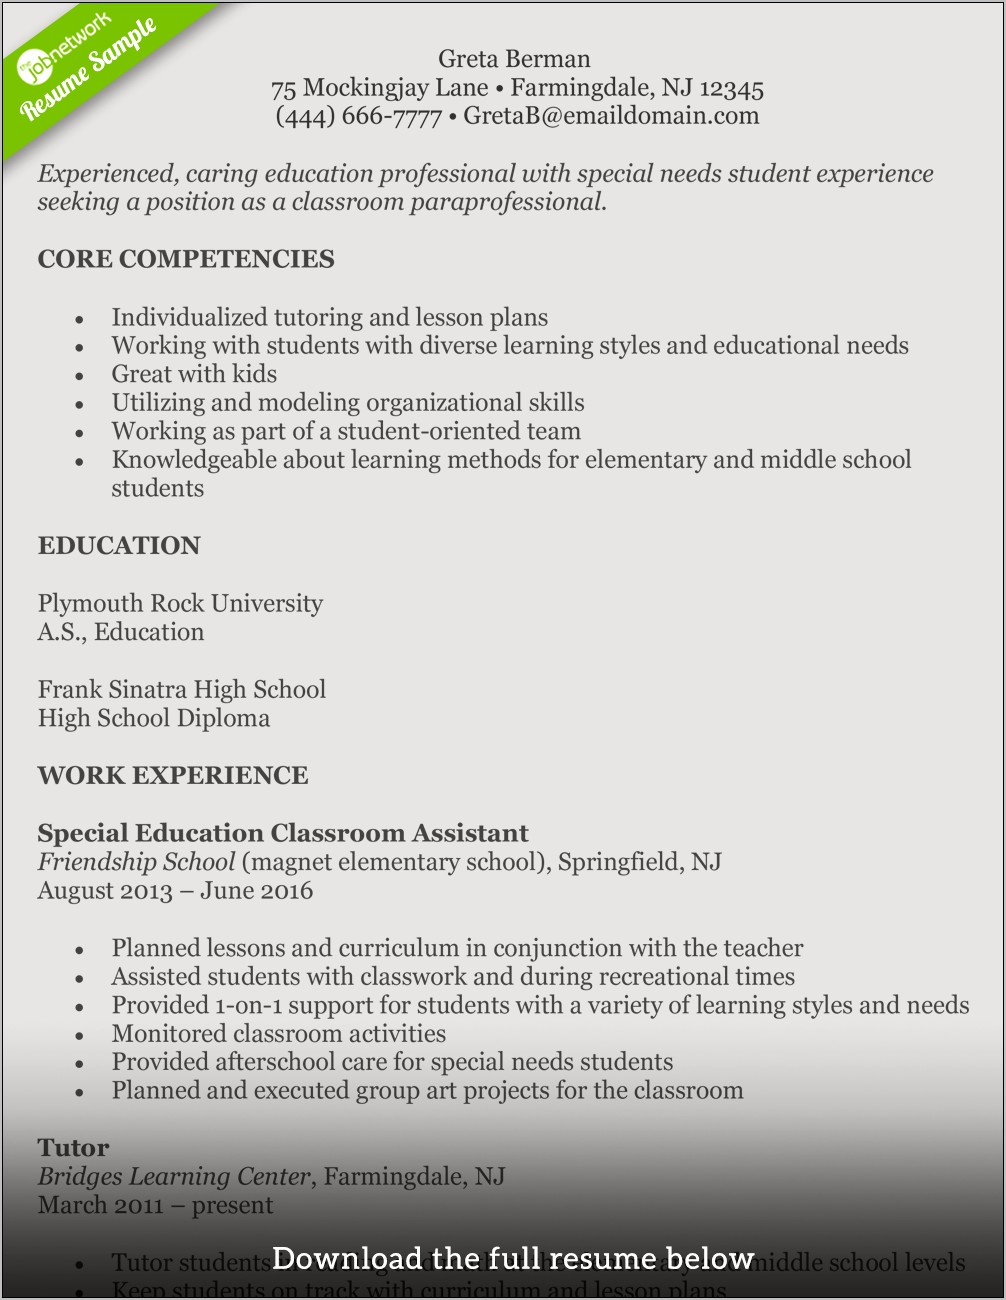 Resume Work Experience For Substitute Teacher